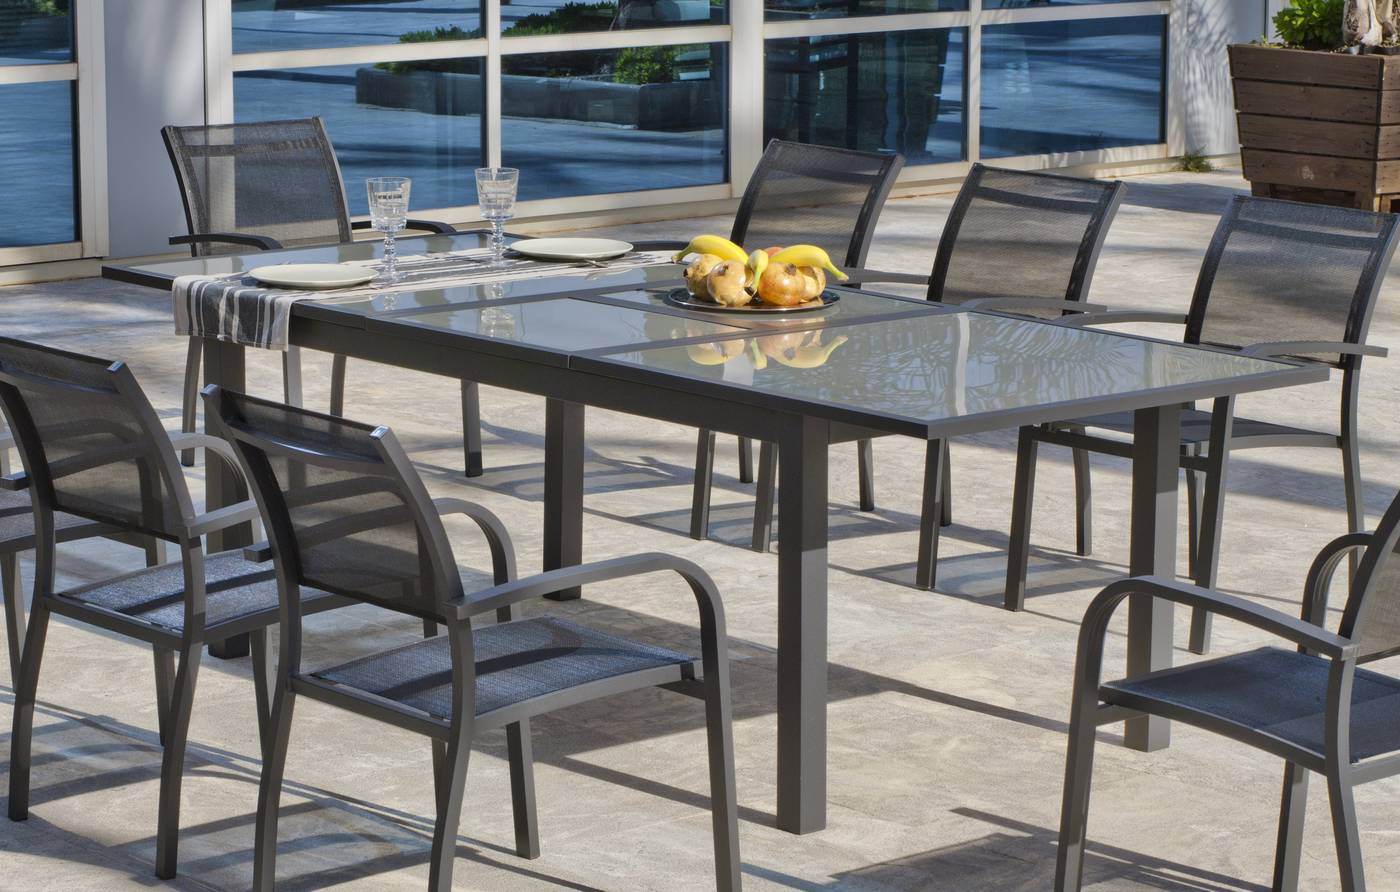 Set Aluminio Horizon-Magali 240-8 - Conjunto de aluminio color antracita: 1 mesa extensible 180-240 cm. + 8 sillones de aluminio y textilen. Mesa válida para 10 sillones.